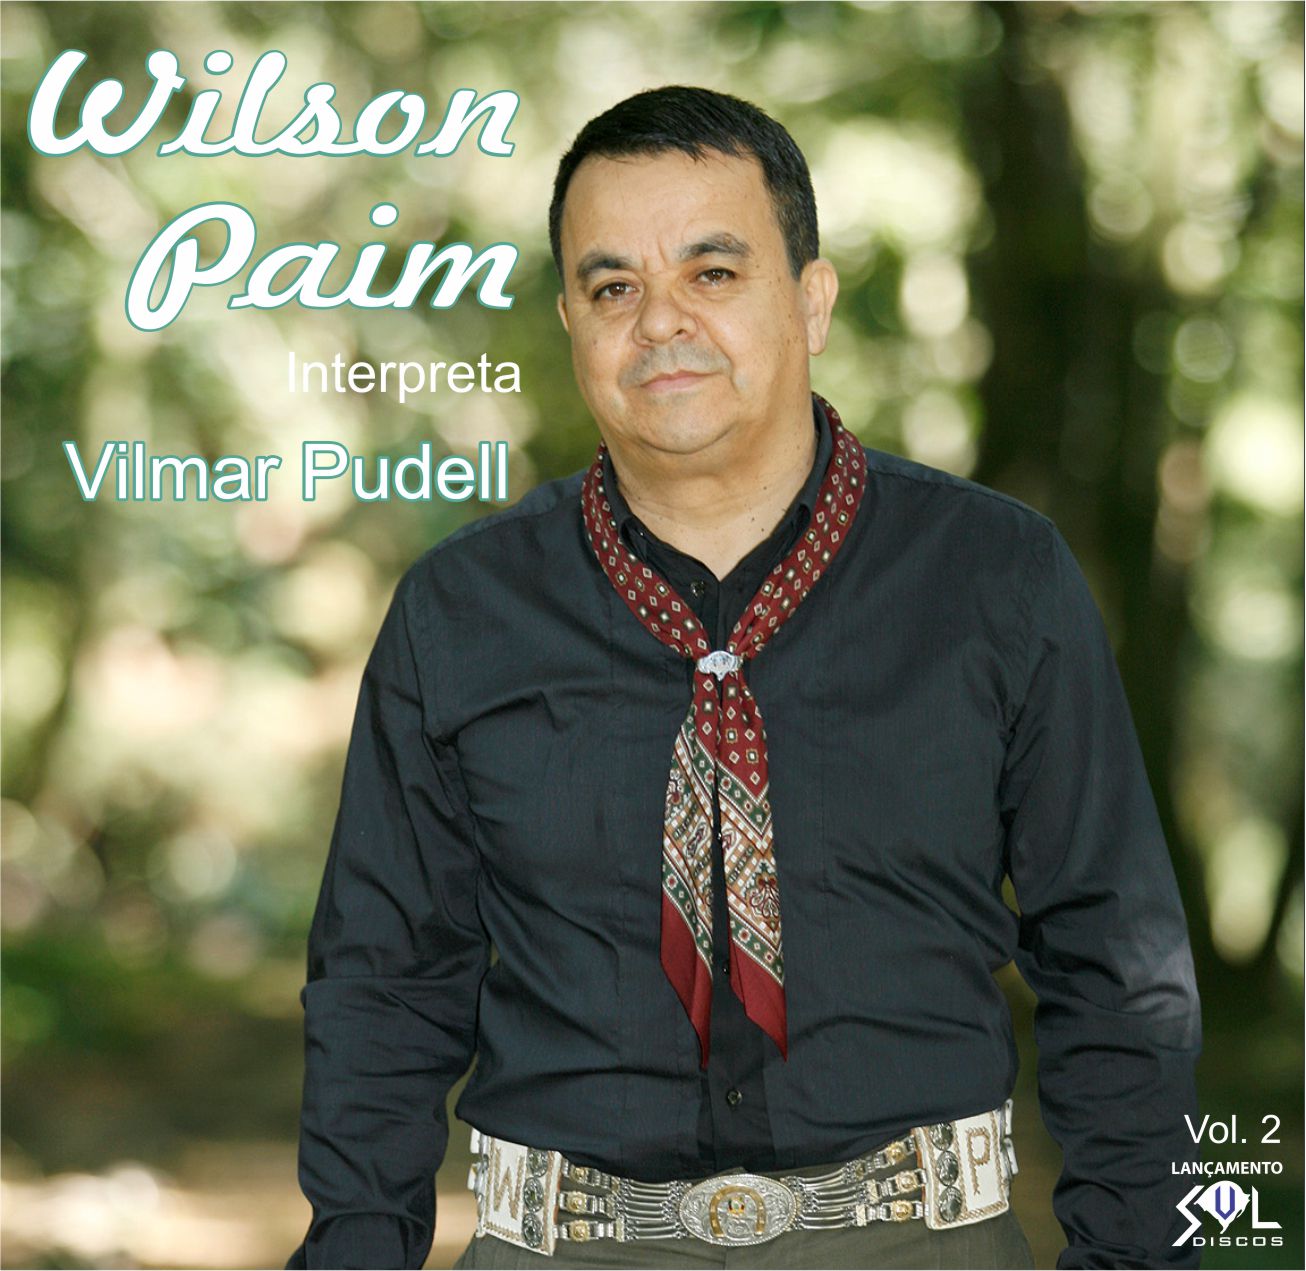 CD Wilson Paim interpreta Vilmar Pudell